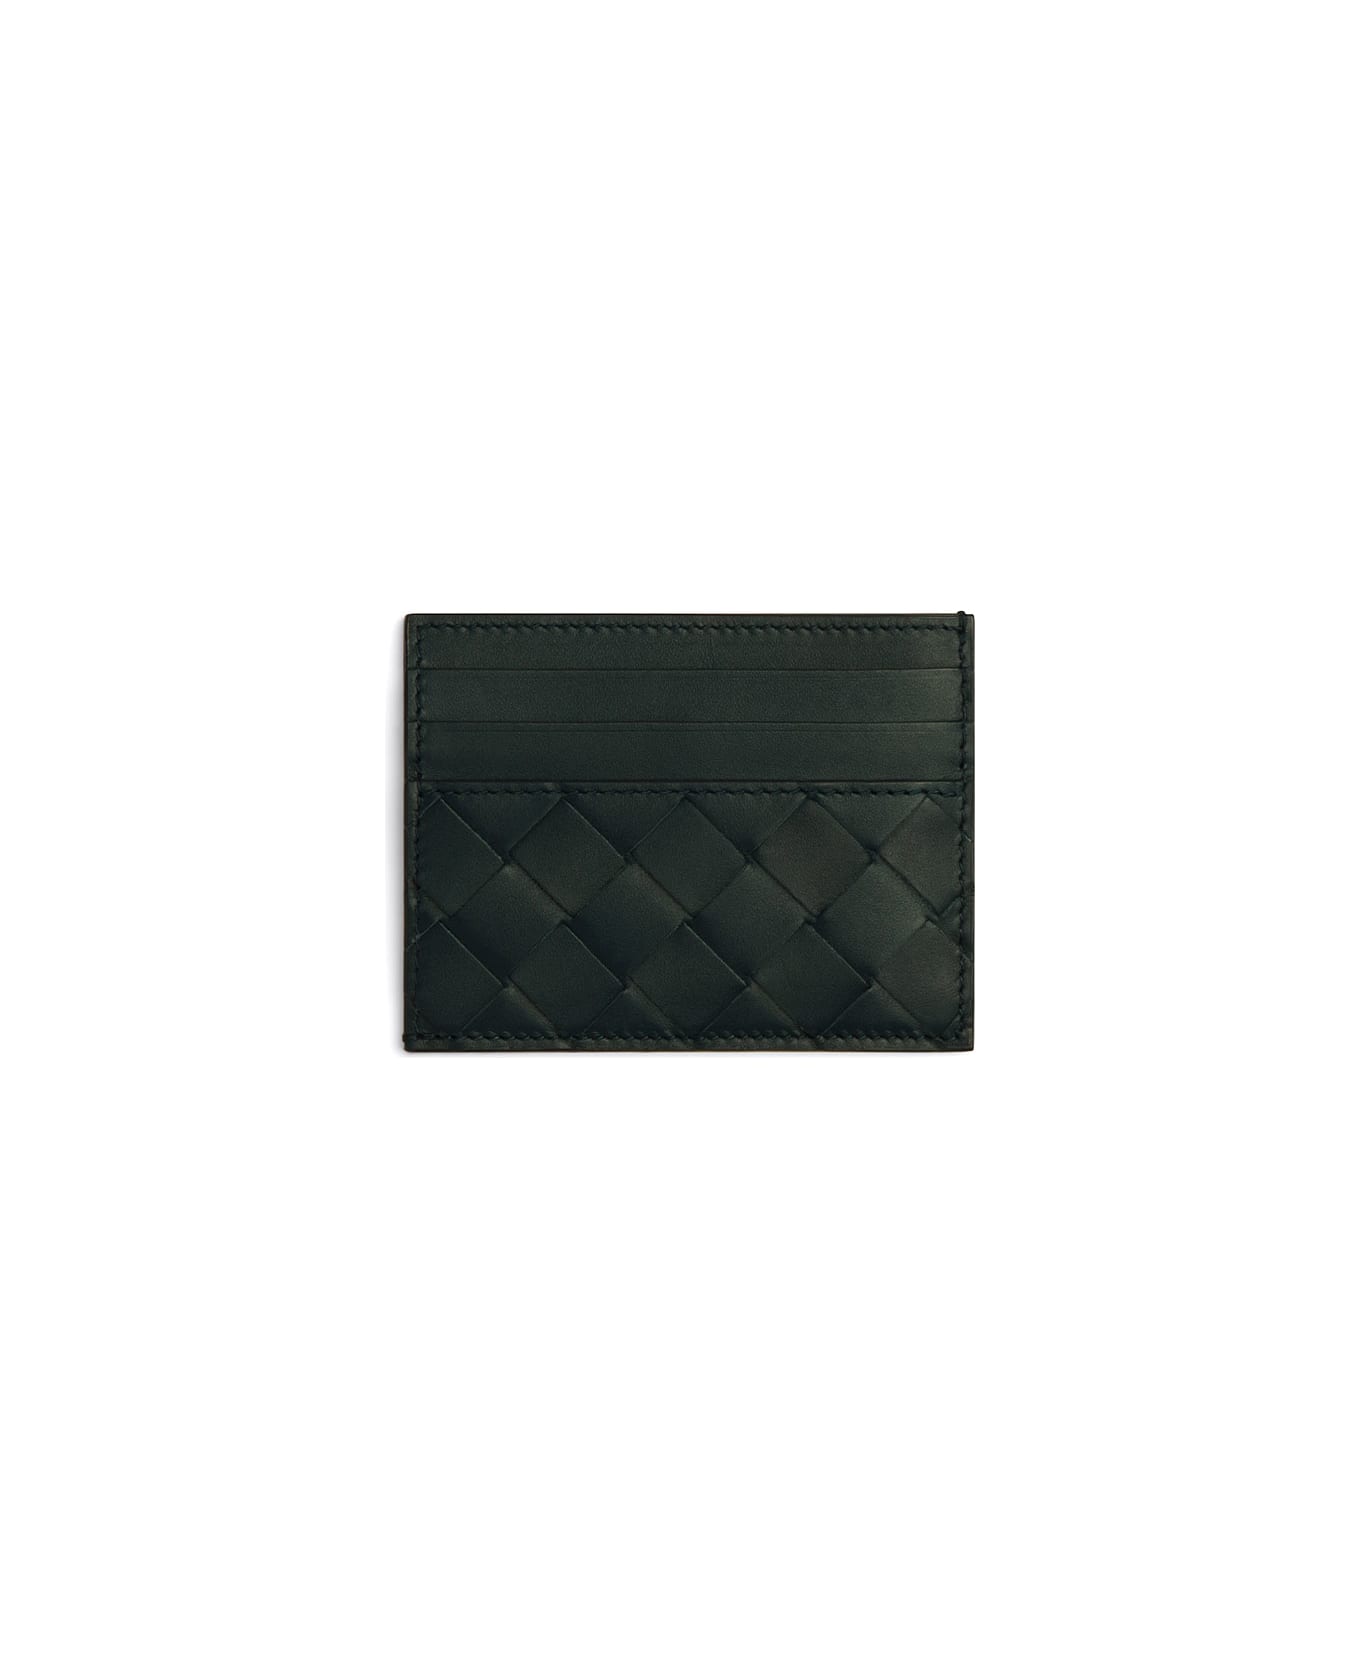 Bottega Veneta Card Holder In Leather - DARK GREEN SILVER